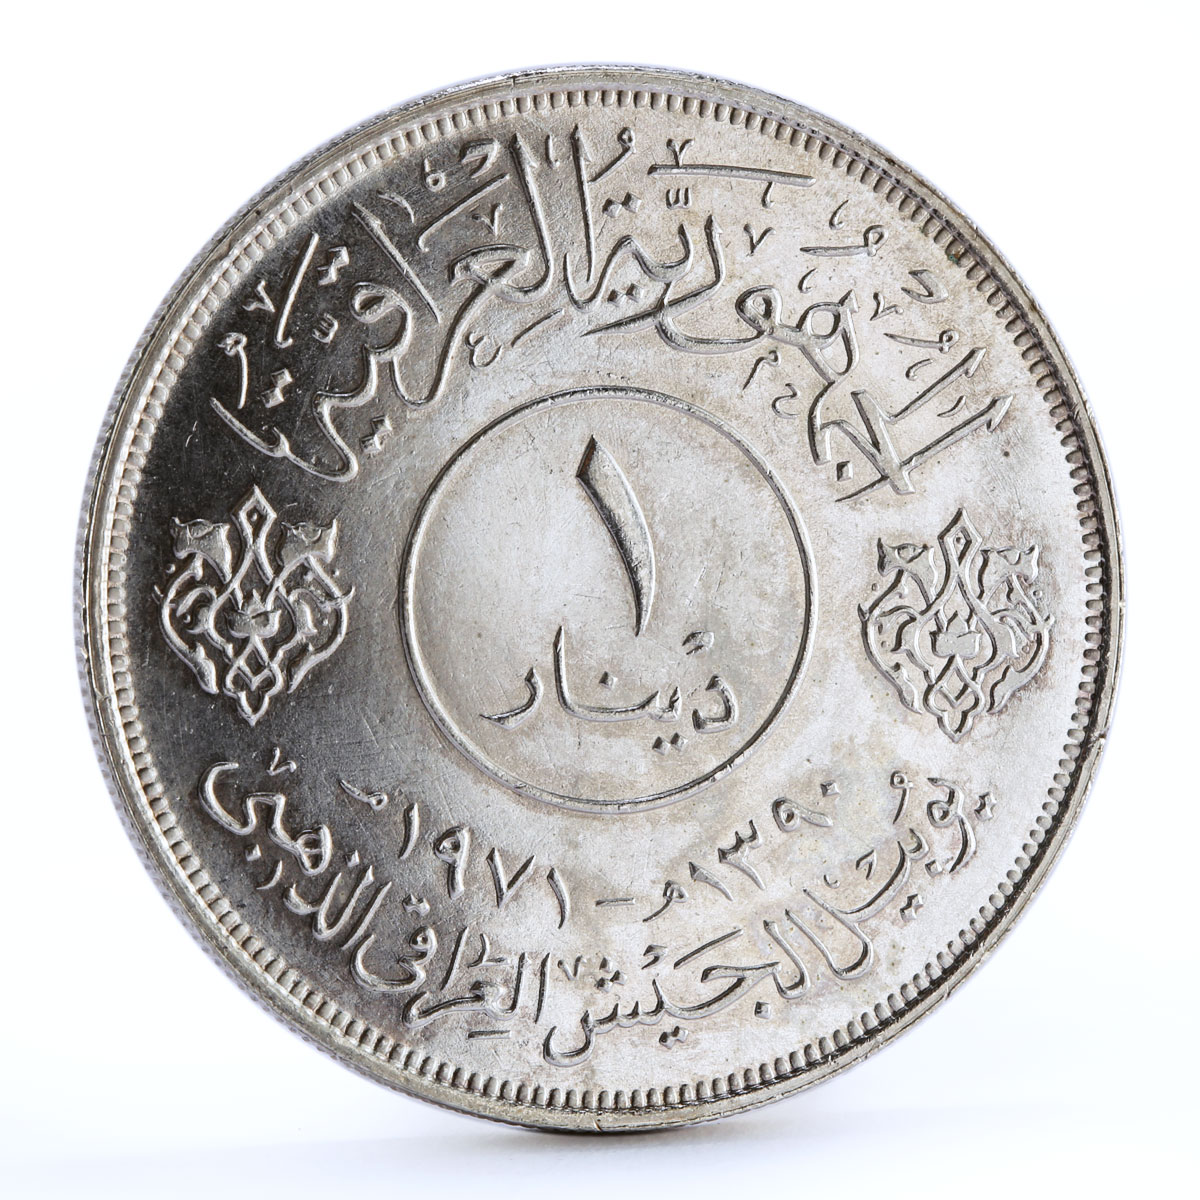 Iraq 1 dinar 50th Anniversary of Army silver coin 1971